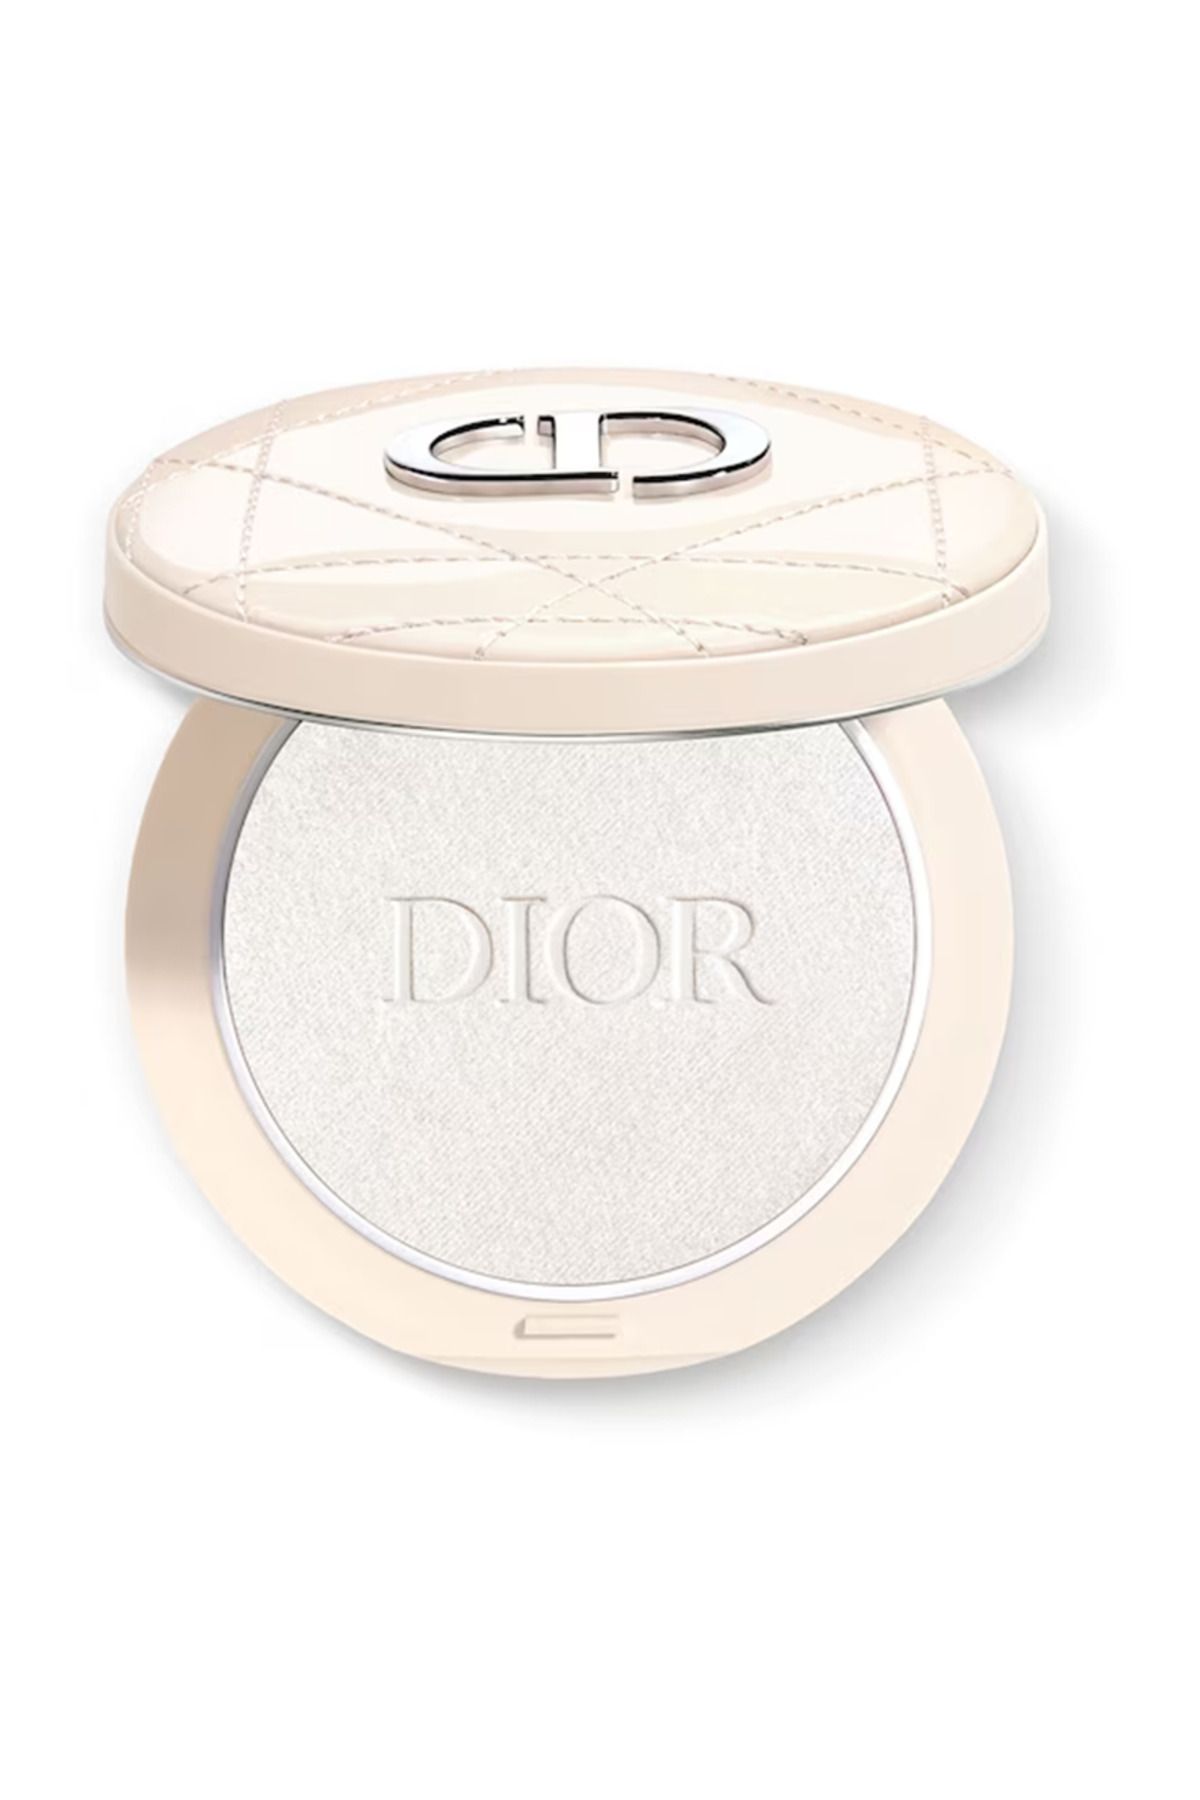 Dior - Aydınlatıcı Pudra - Dior Forever Couture Luminizer Highlighter - 03 Pearlescent Glow (6 g)